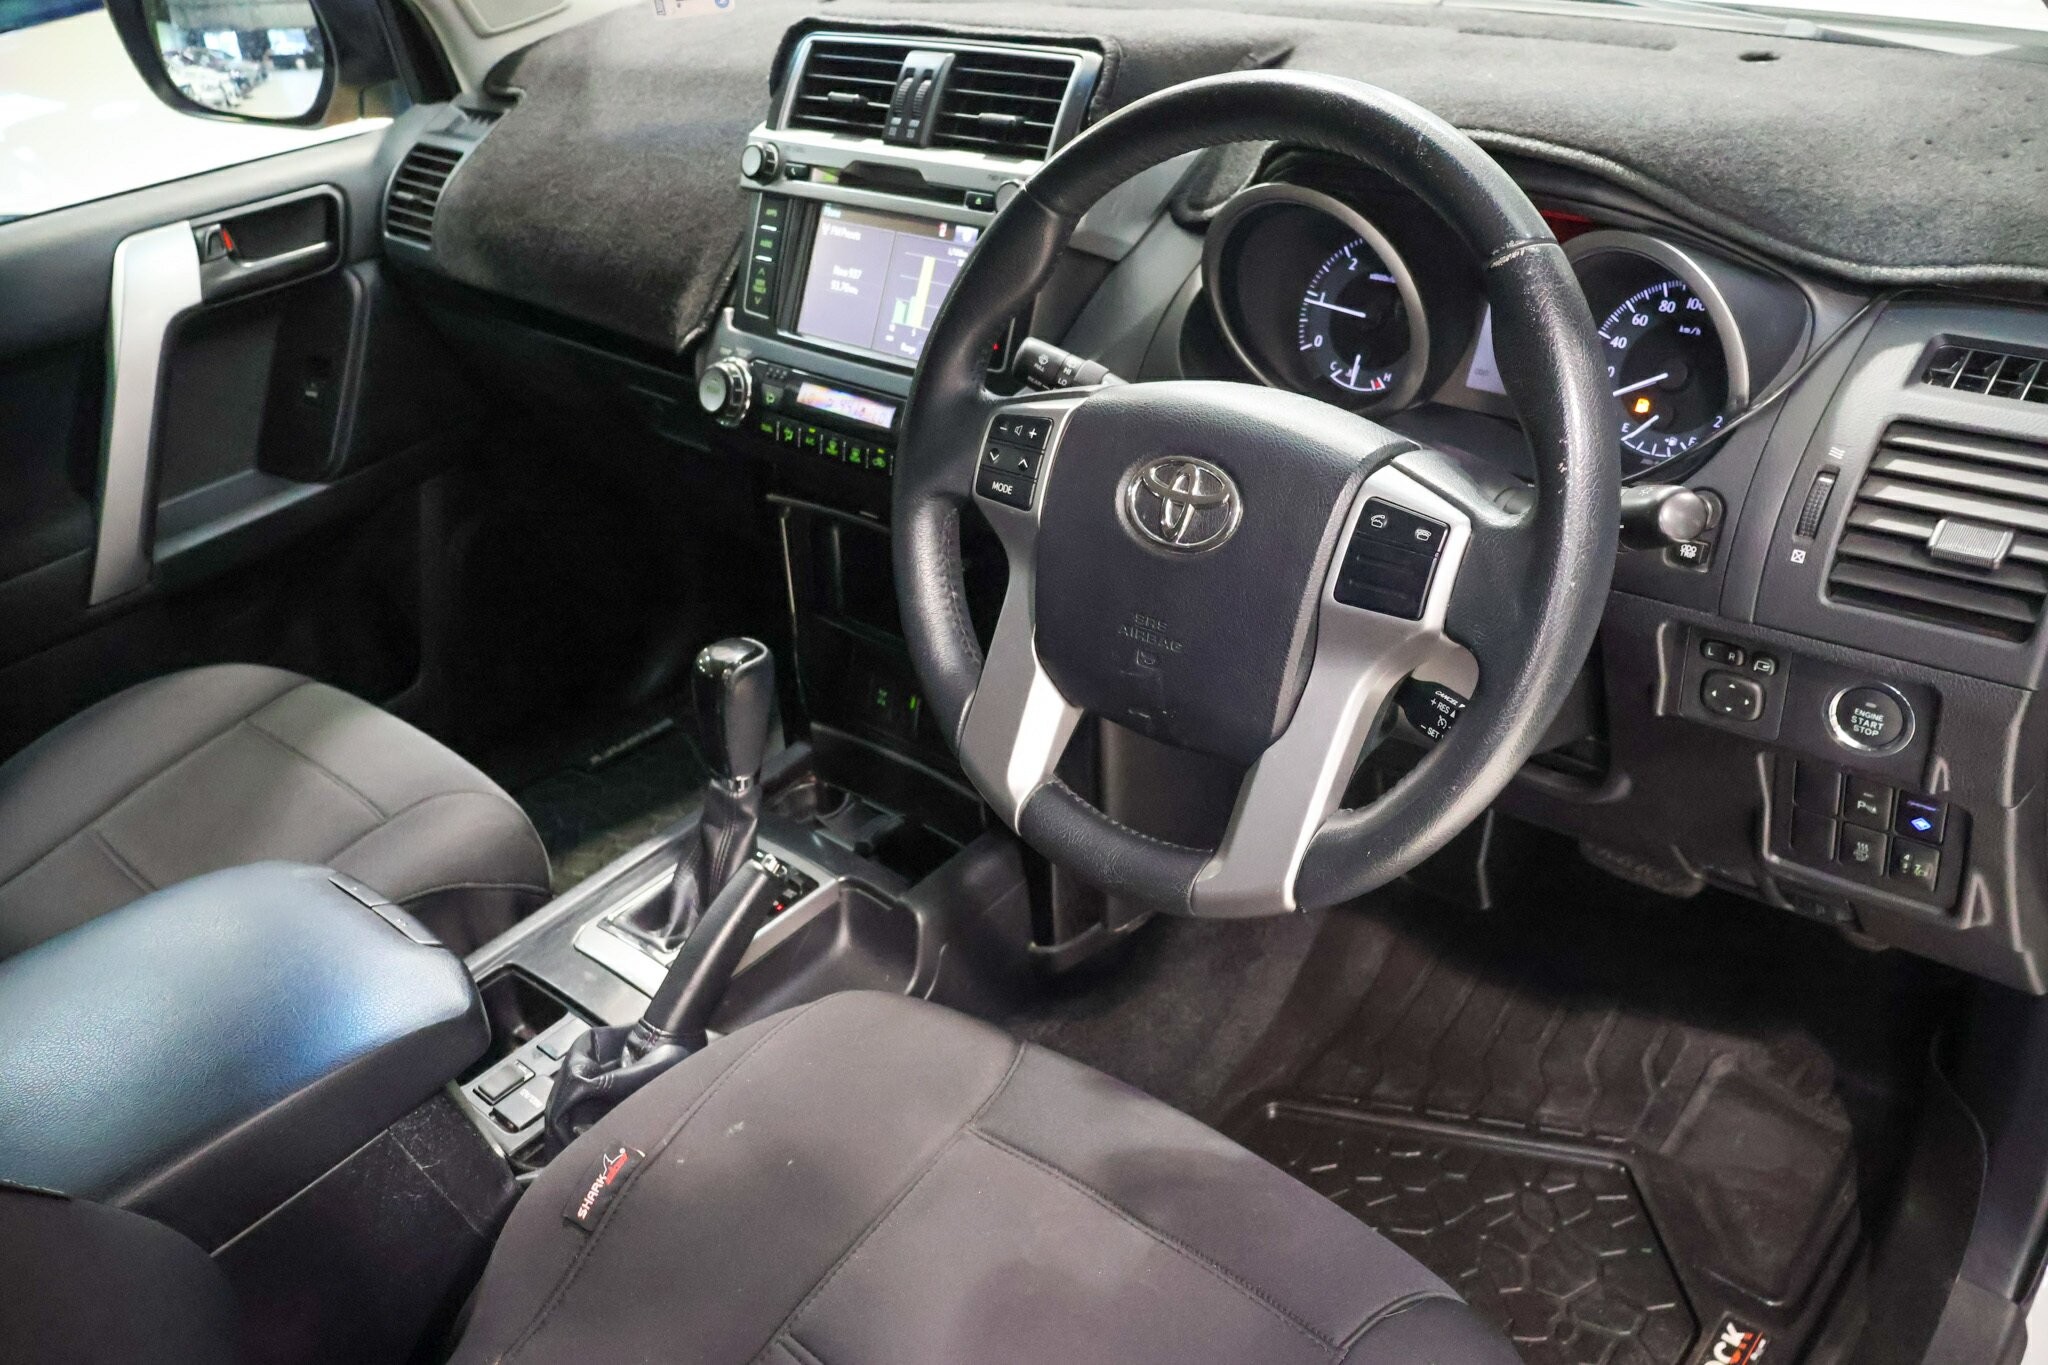 Toyota Landcruiser Prado image 4